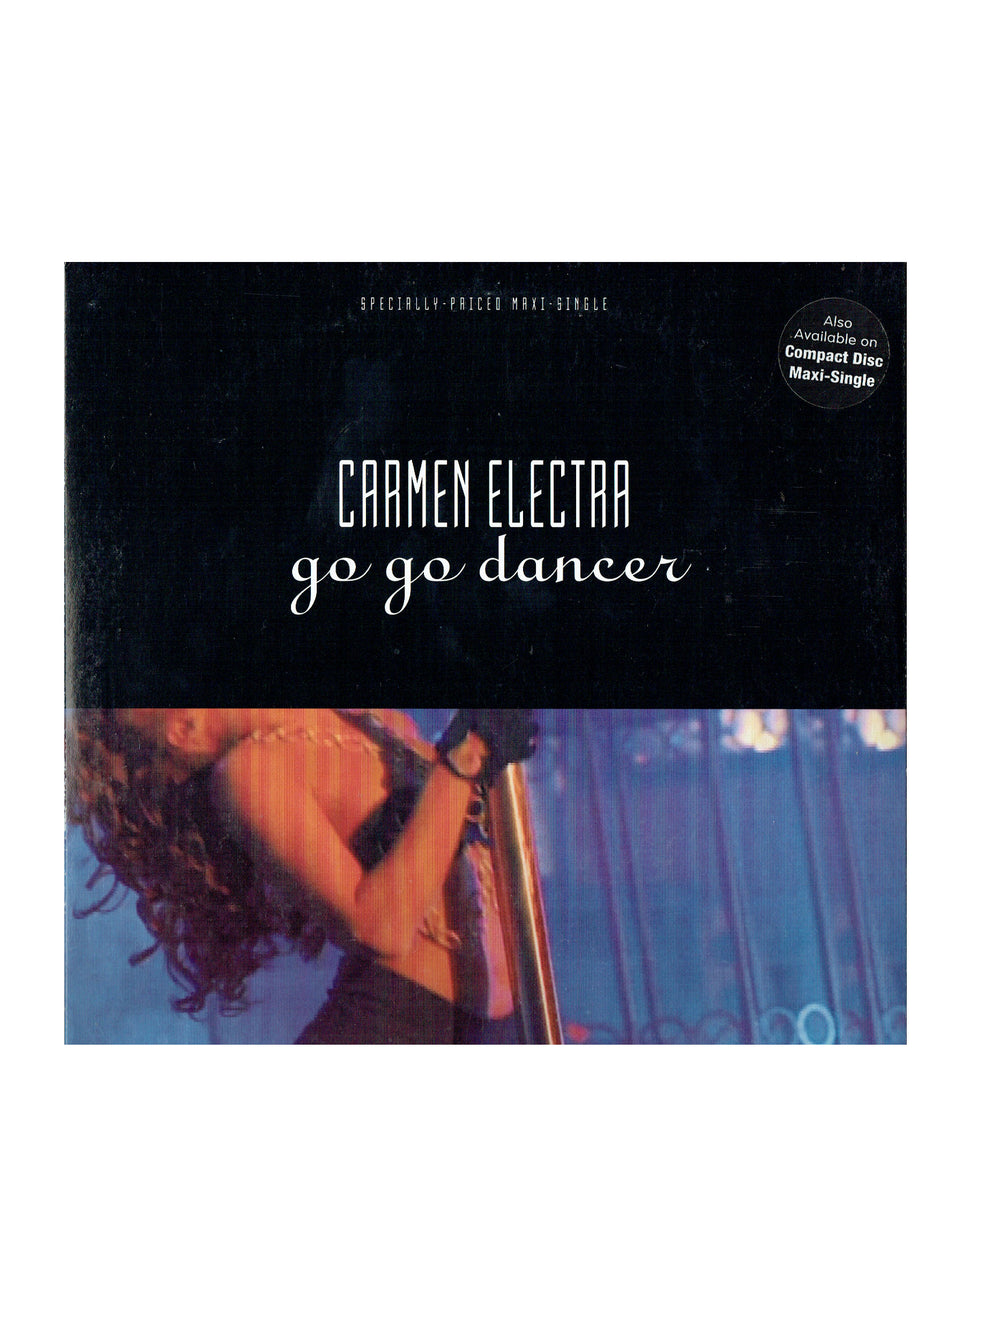 Prince – Carmen Electra Go Go Dancer Vinyl 12" Maxi Single Promo US Preloved: 1992